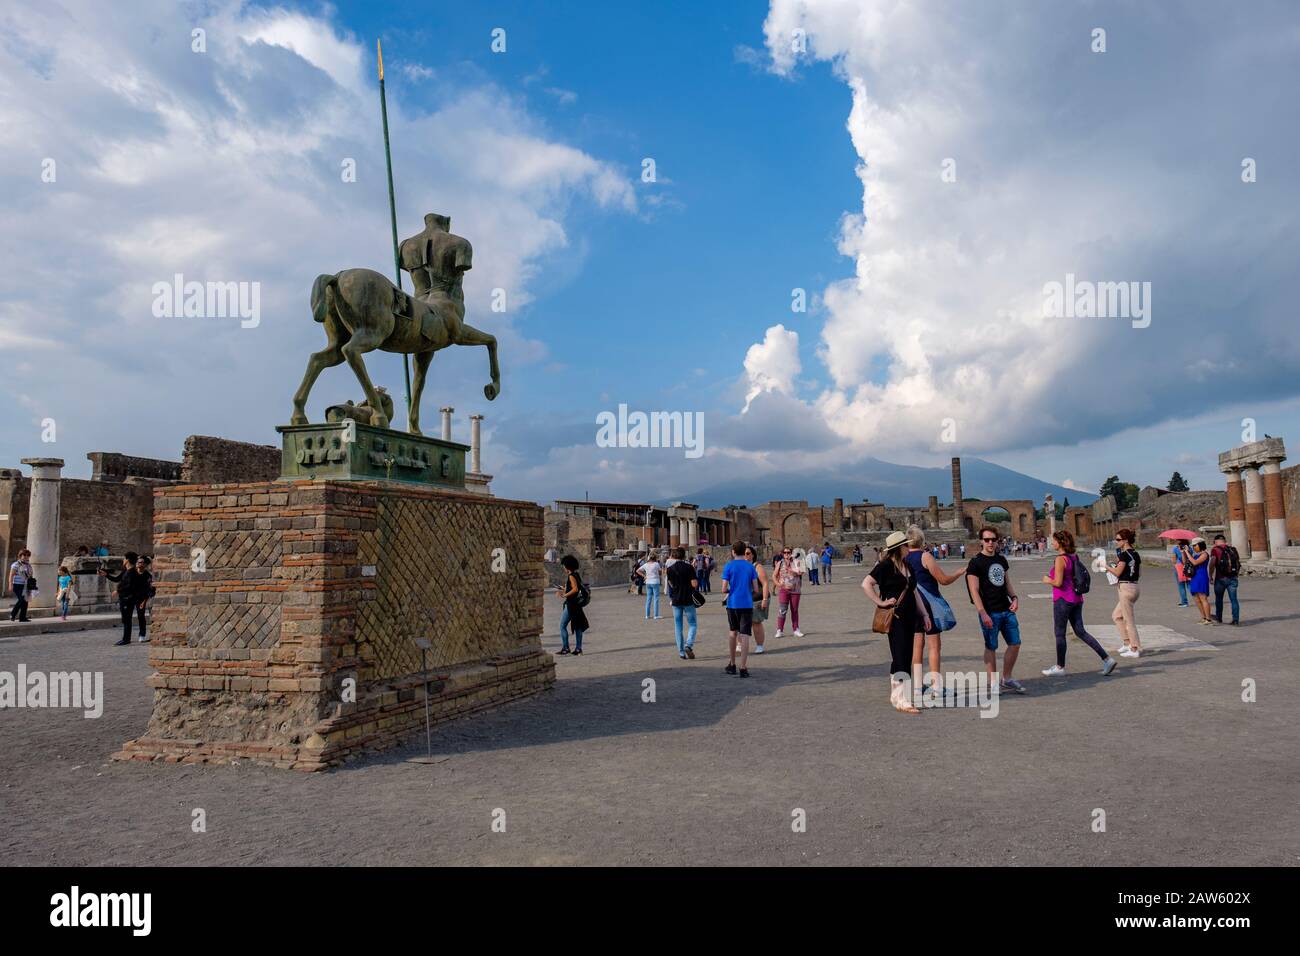 Ruinas de Pompeya, turistas que visitan Pompeya Forum - Centauro, estatua de bronce de Igor Motoraj, Monte Vesubio en el fondo, antigua ciudad de Pompeya, Italia Foto de stock